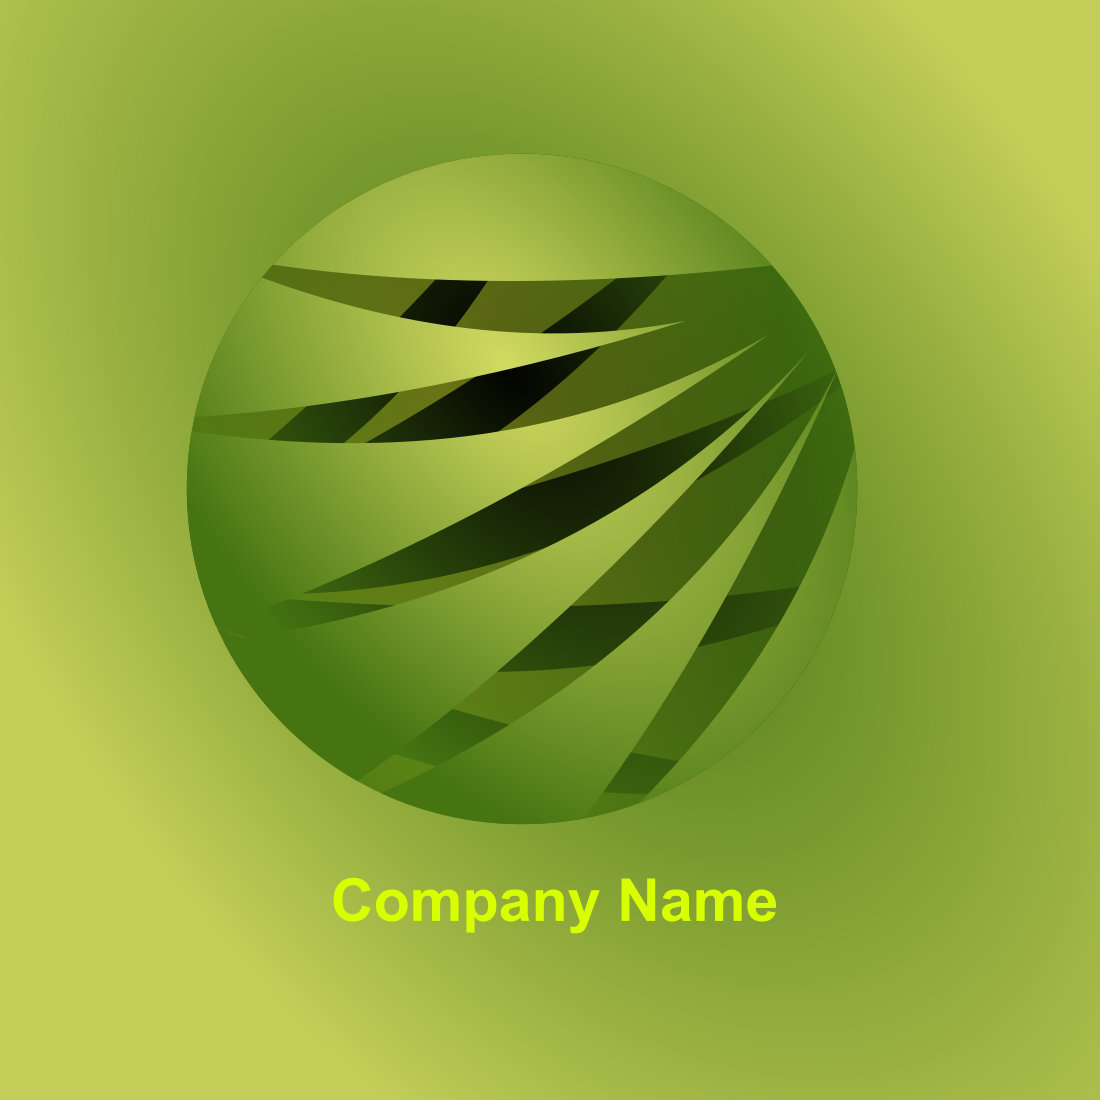 Travel Logo cover image.